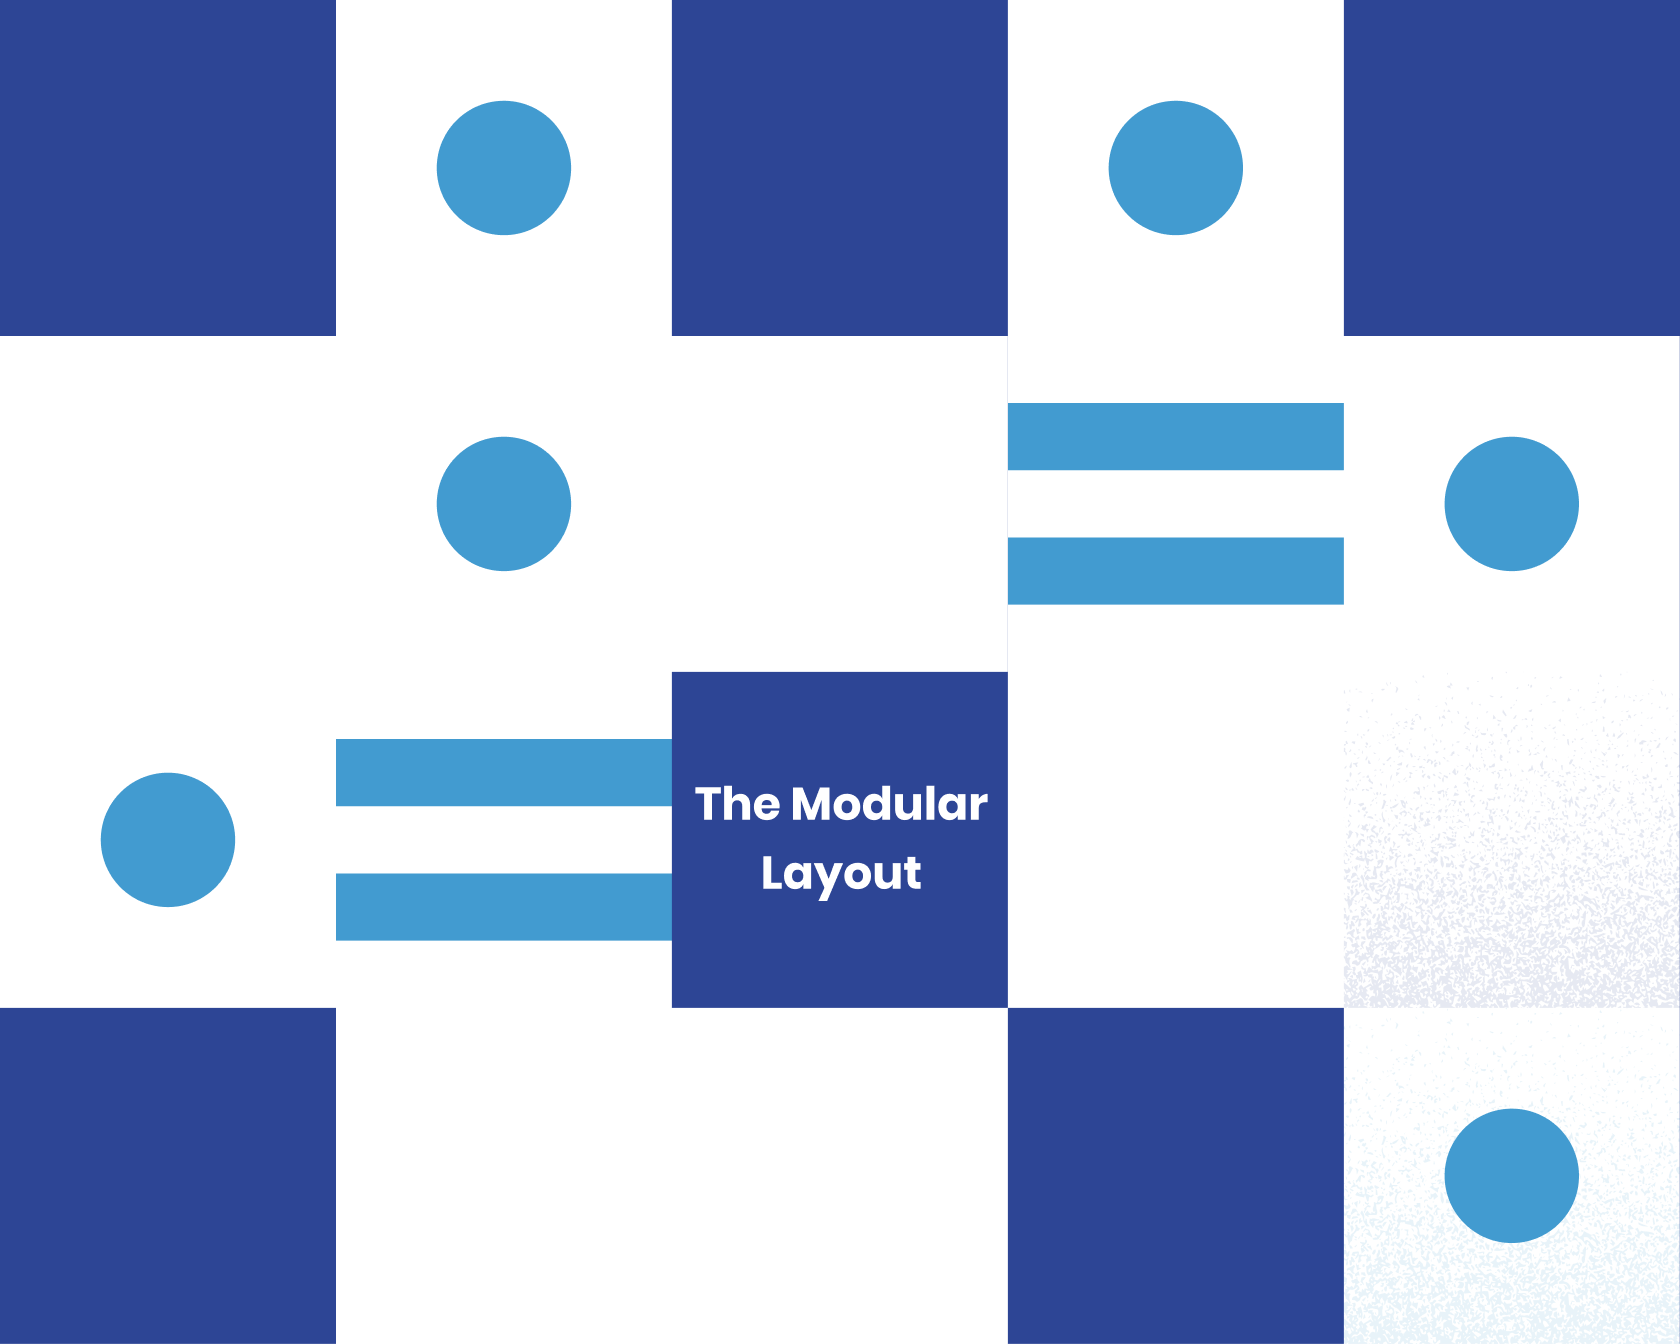 The Modular Layout